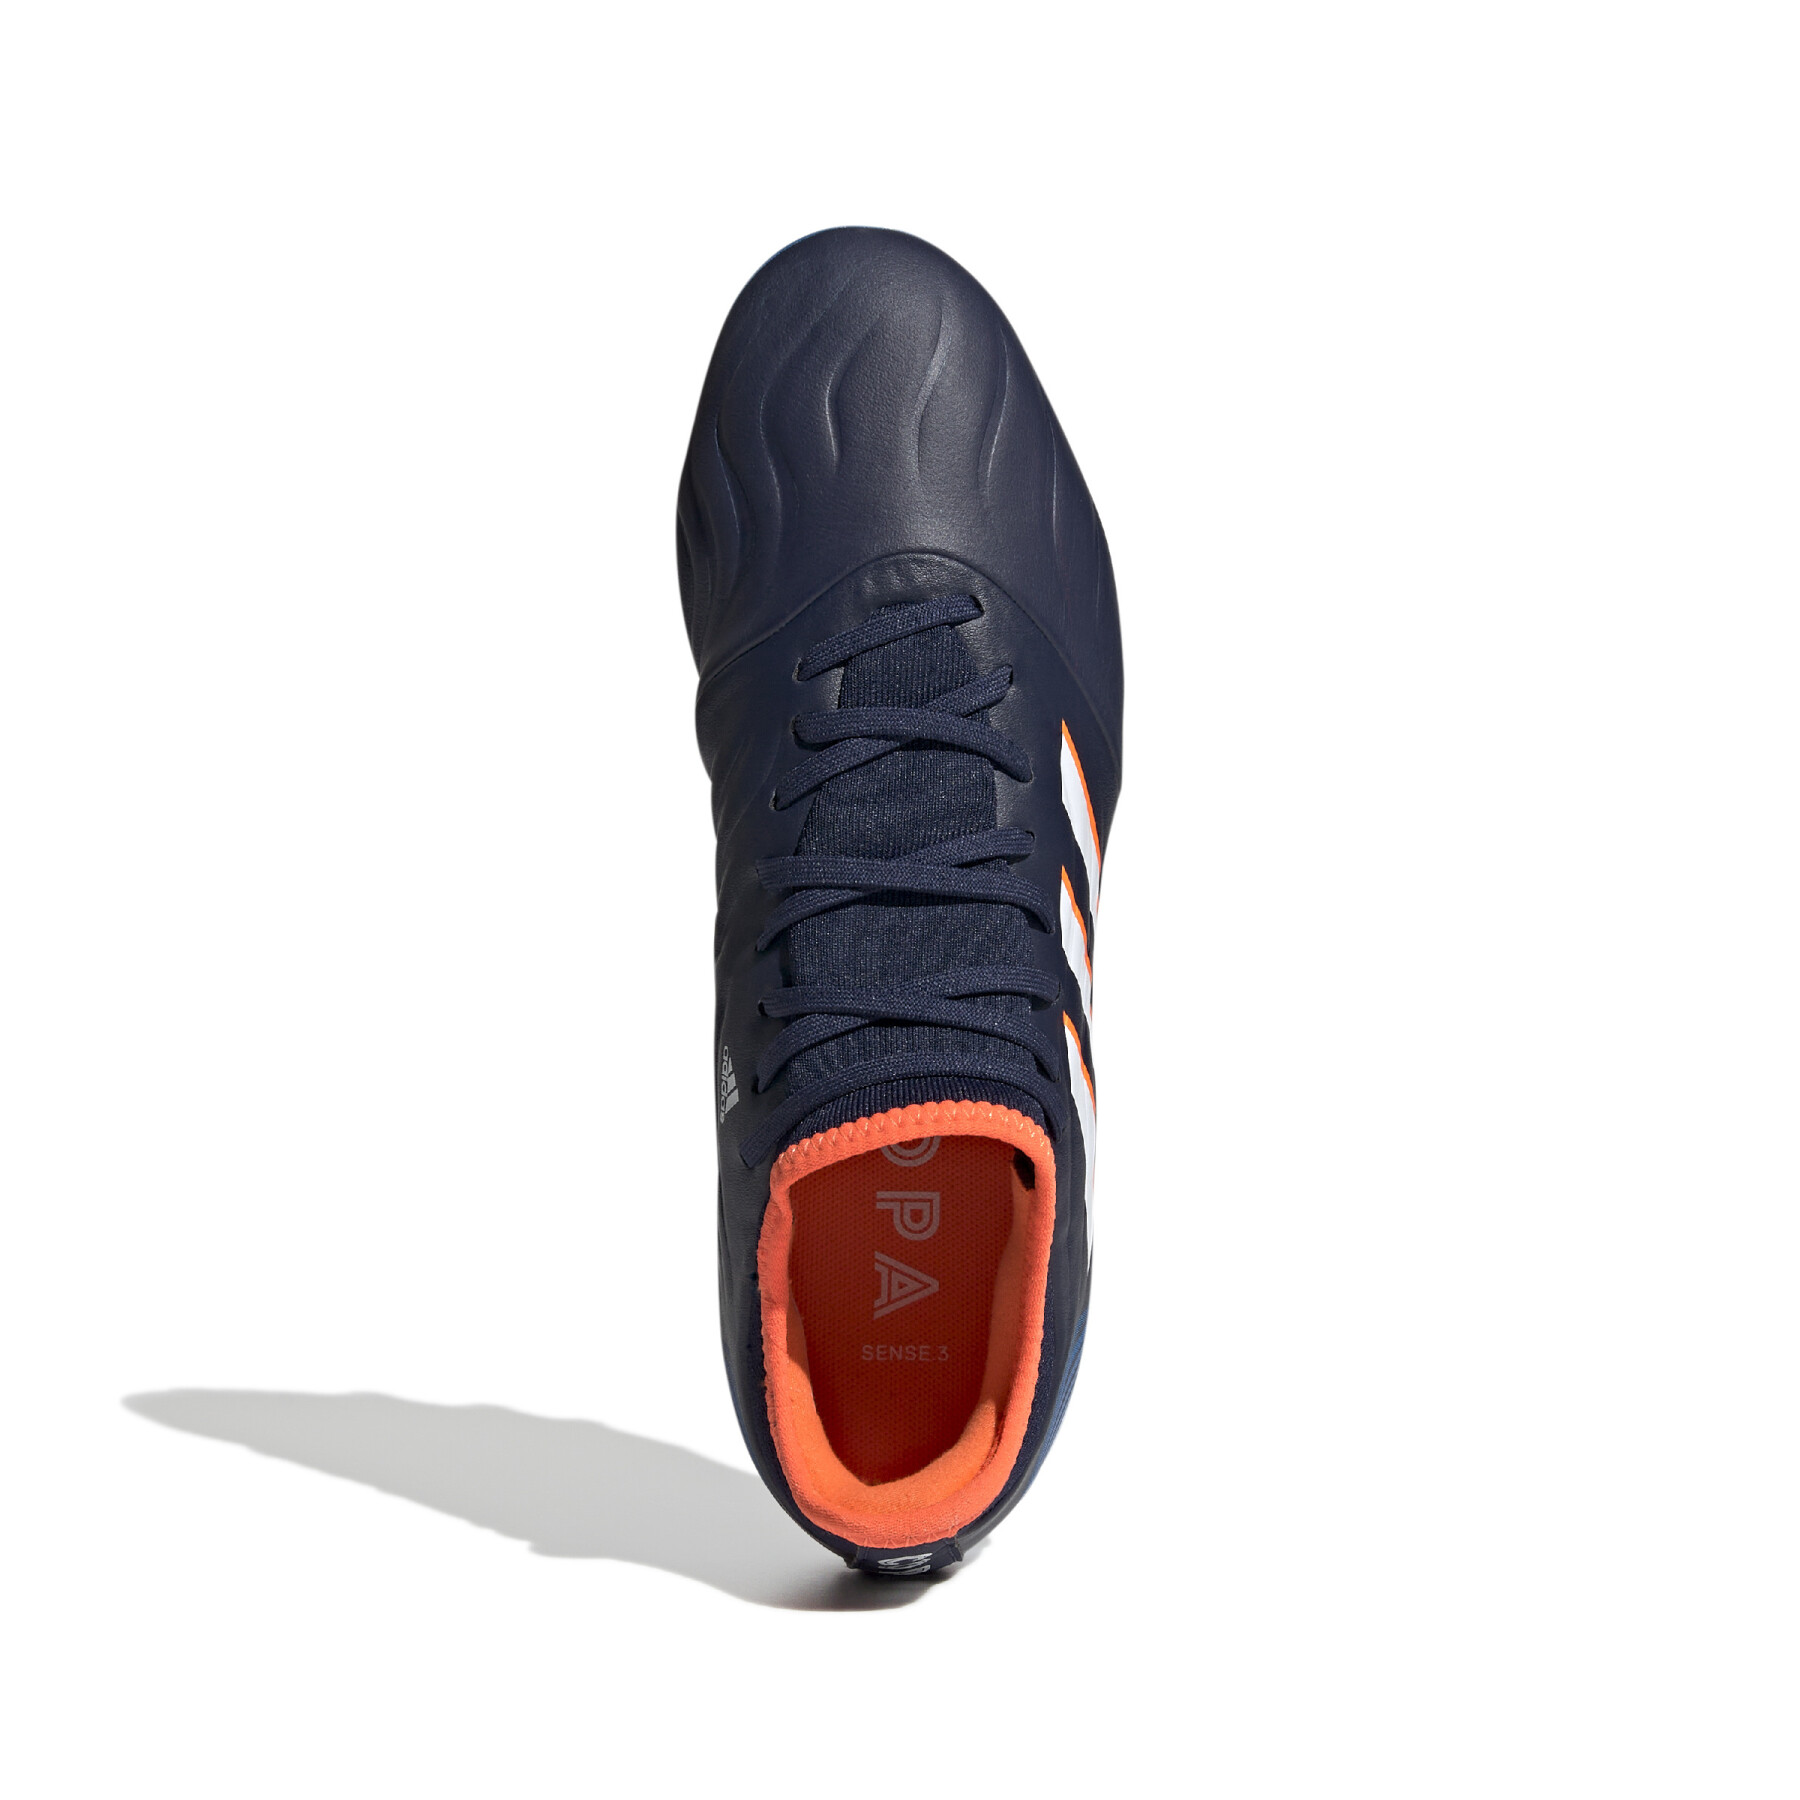 Chaussures de football adidas Copa Sense.3 MG - Sapphire Edge Pack